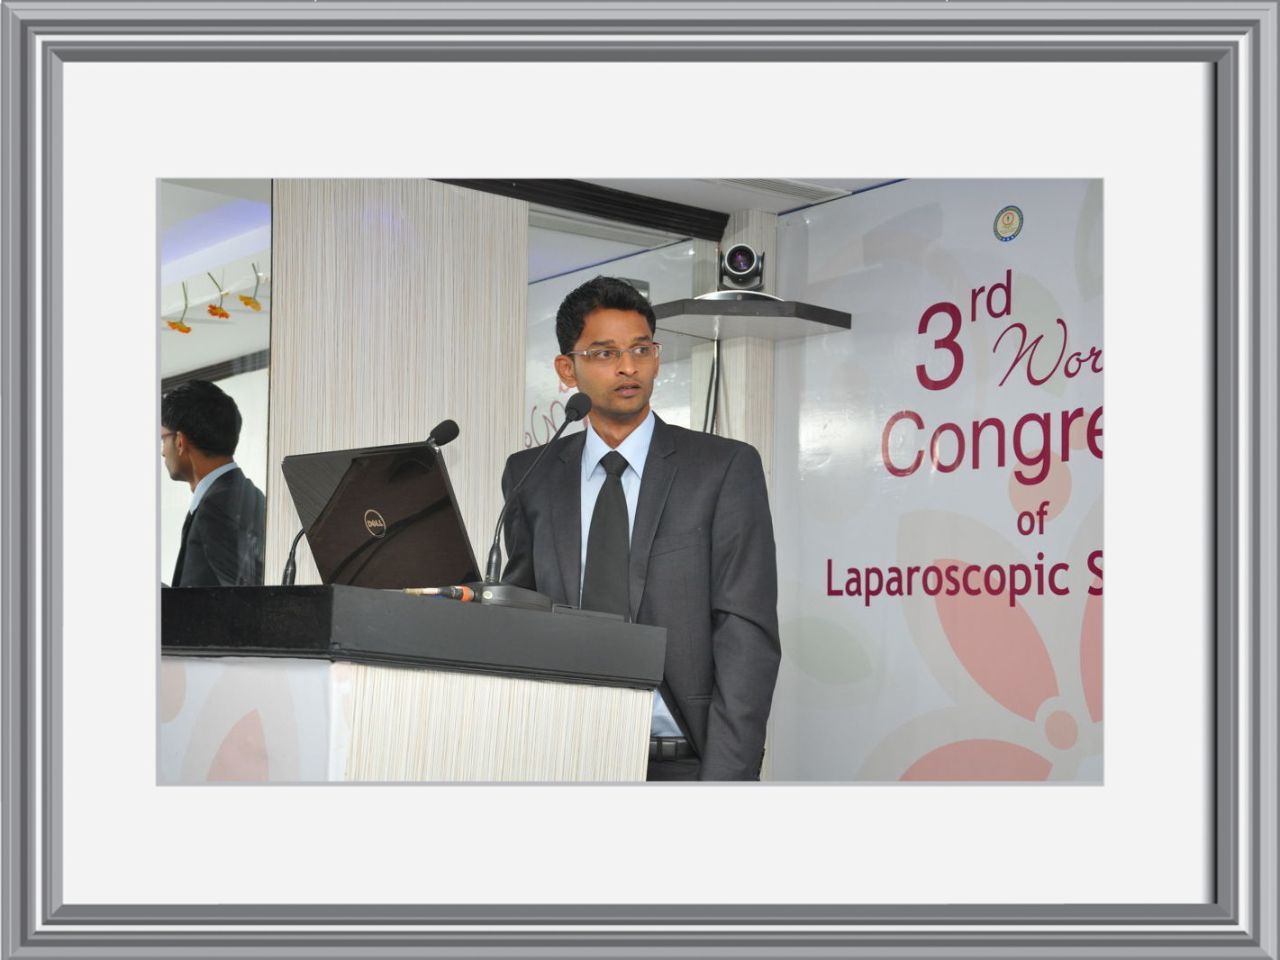 World Association of Laparoscopic Surgeons